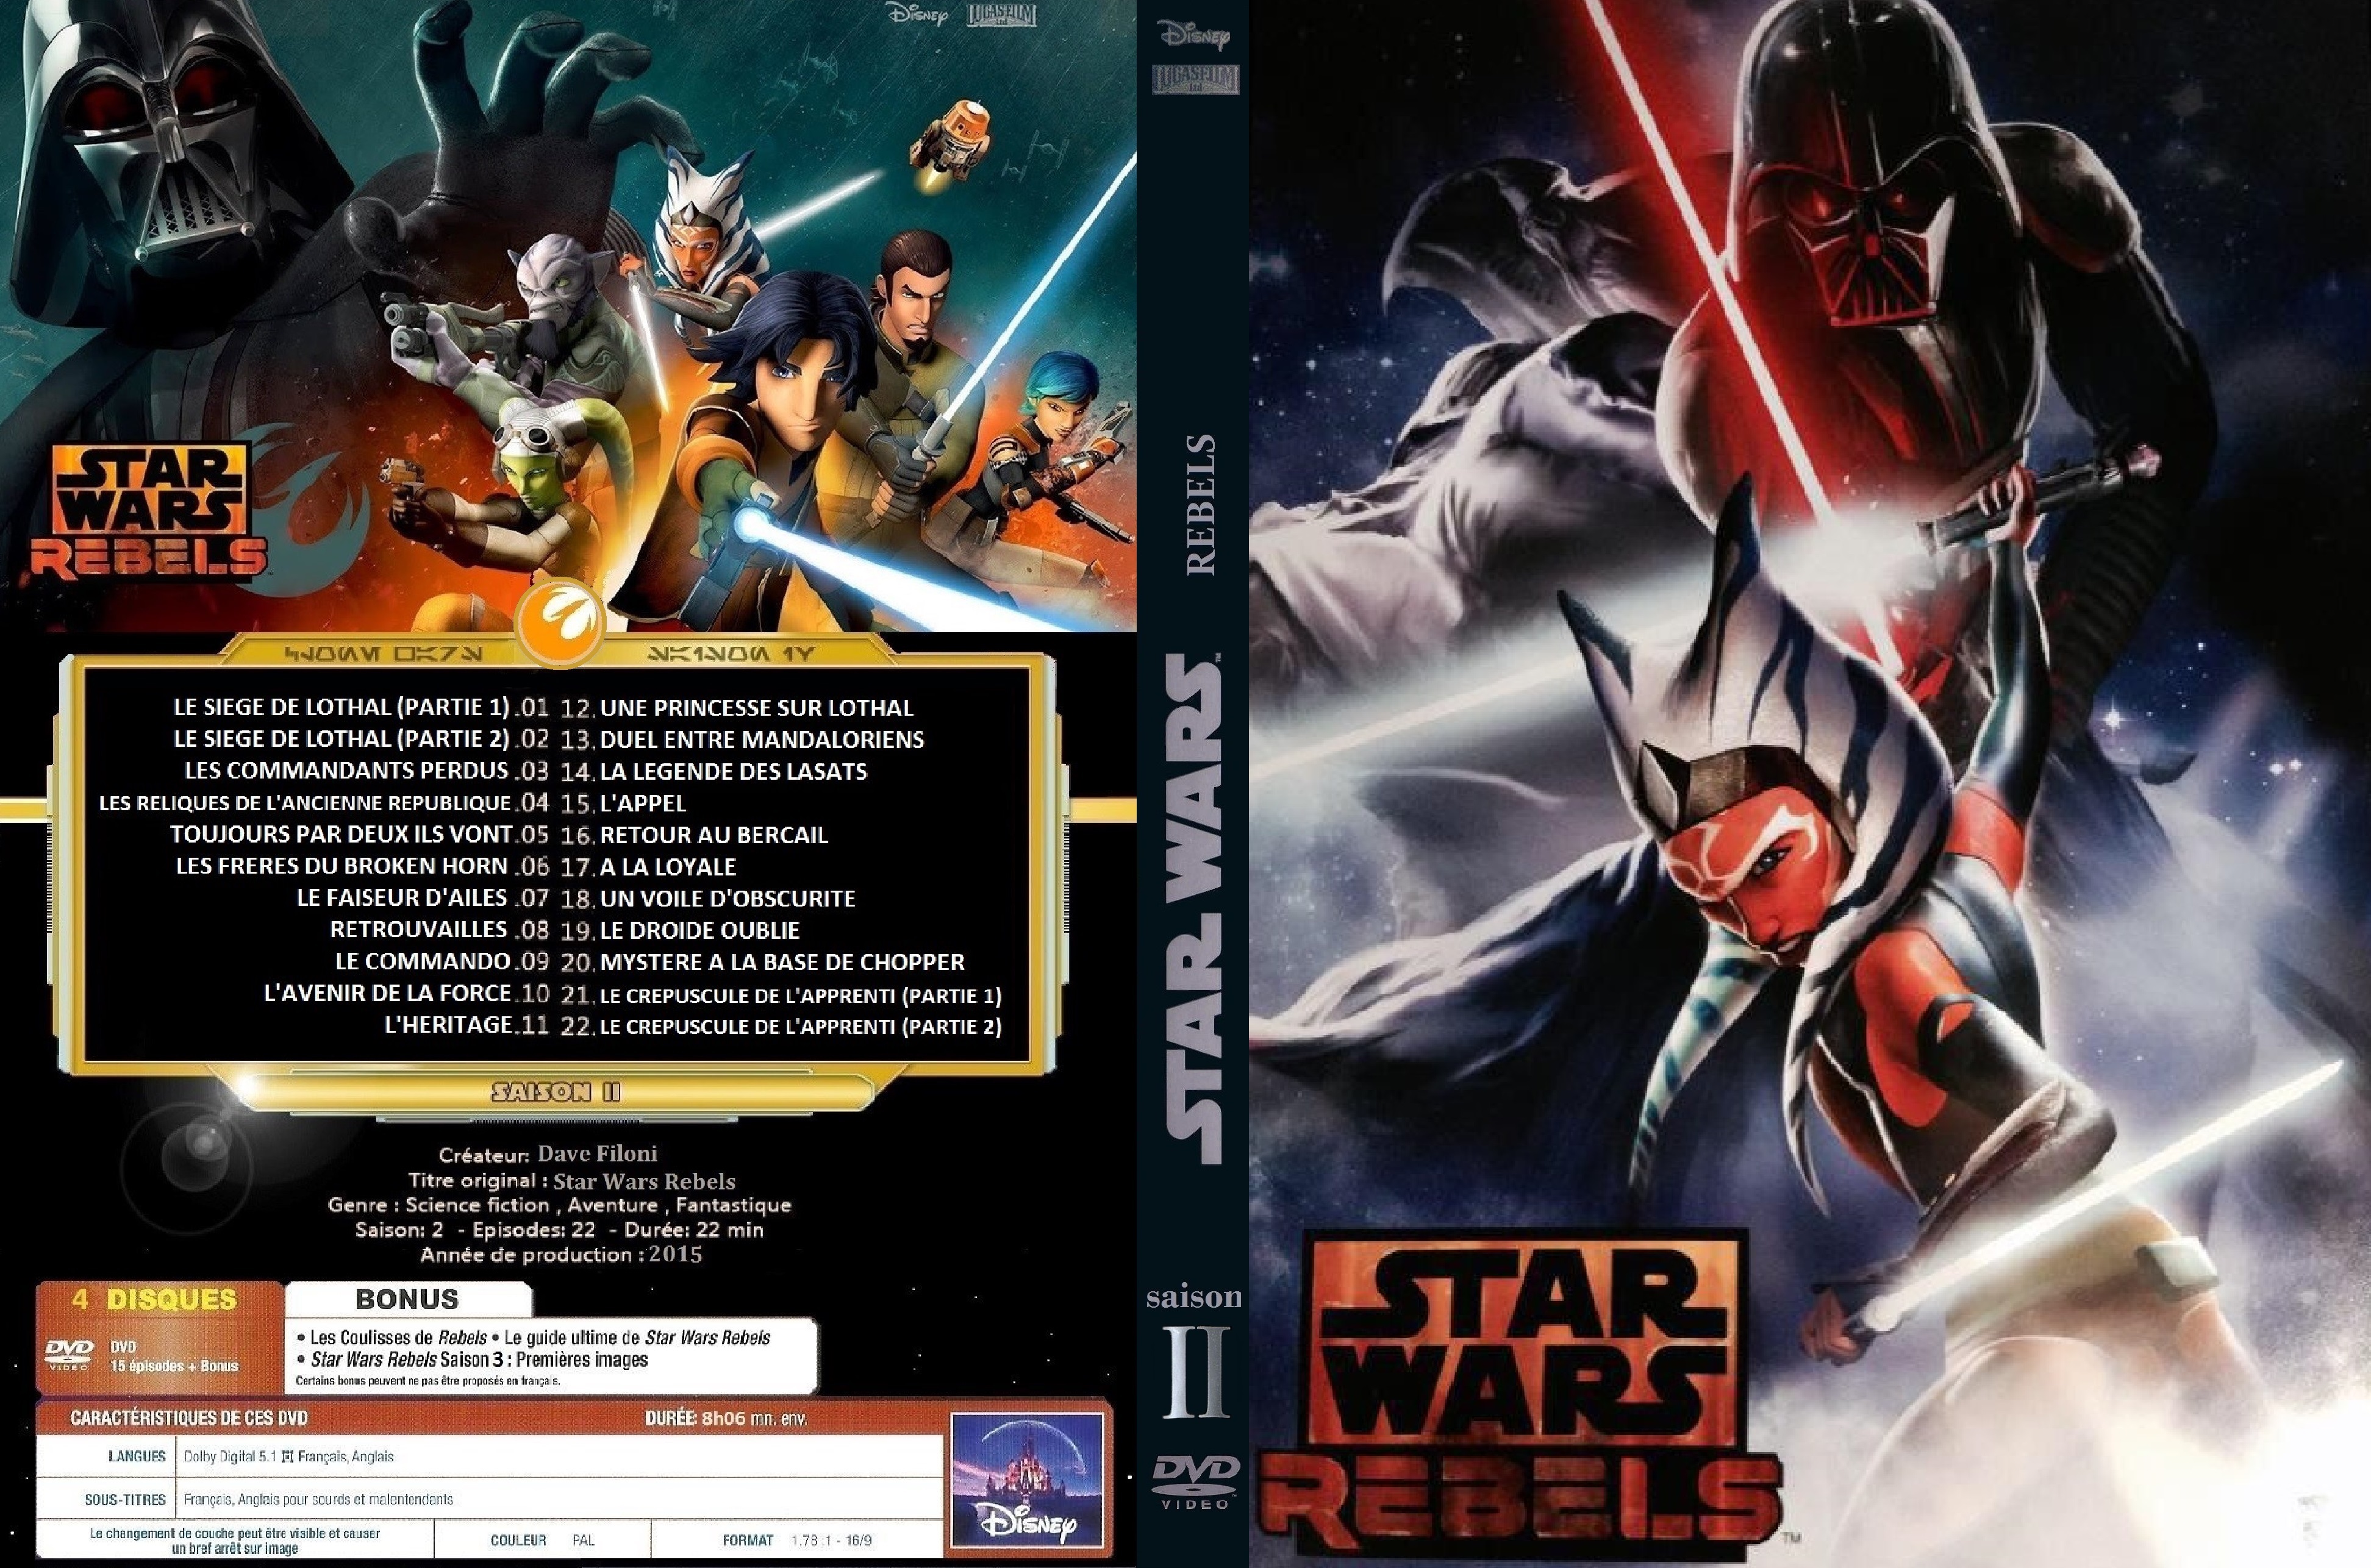 Jaquette DVD Star Wars Rebels saison 2 custom v2